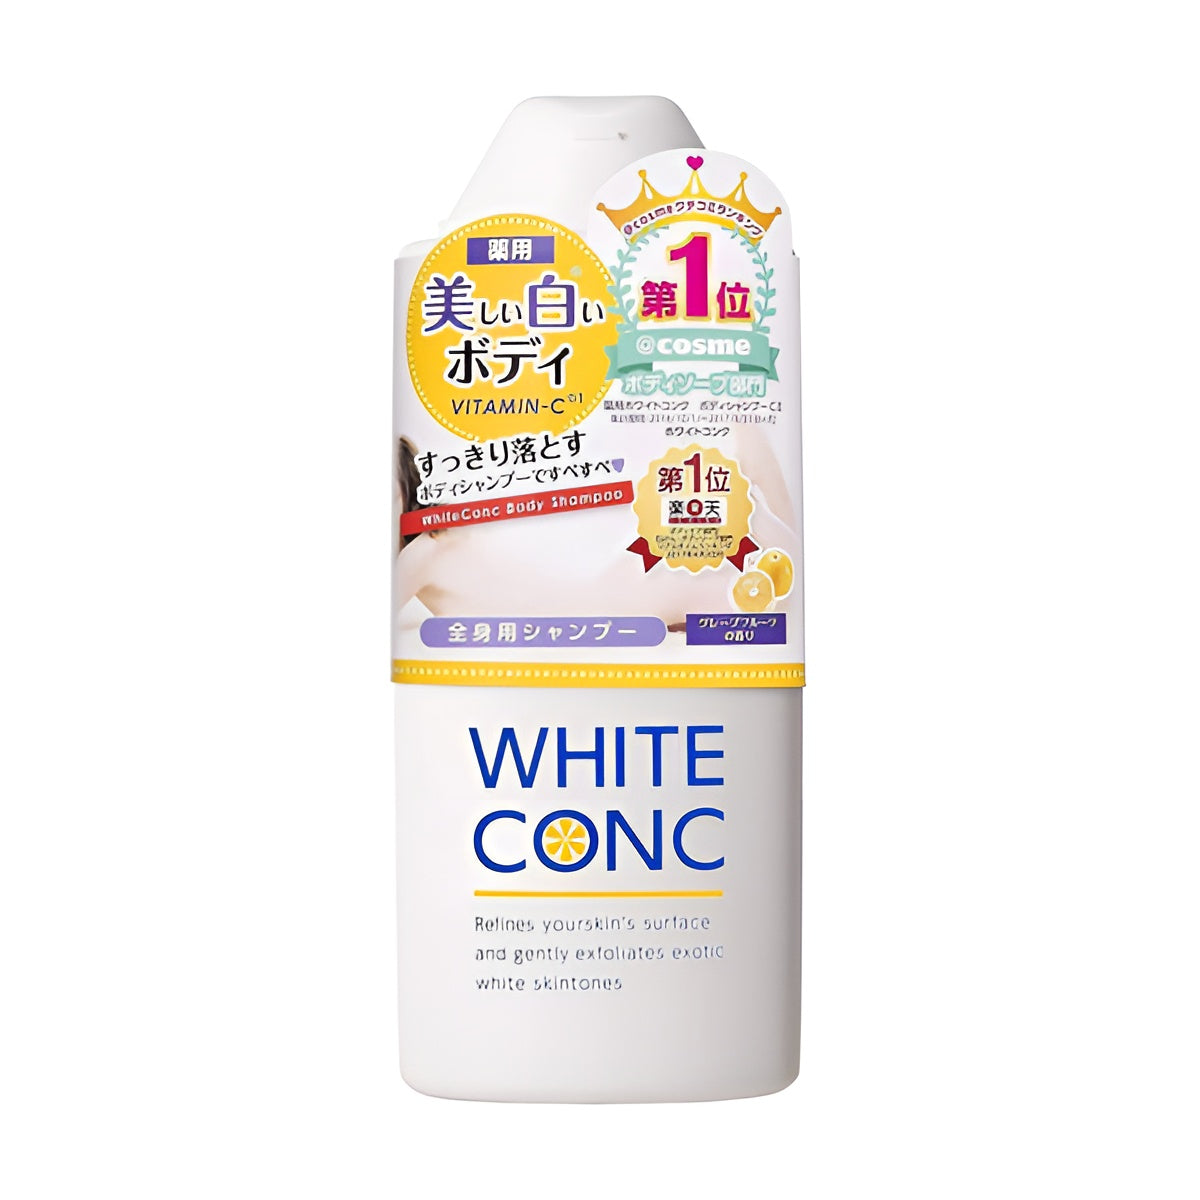 White Conc | Body Shampoo 360ml